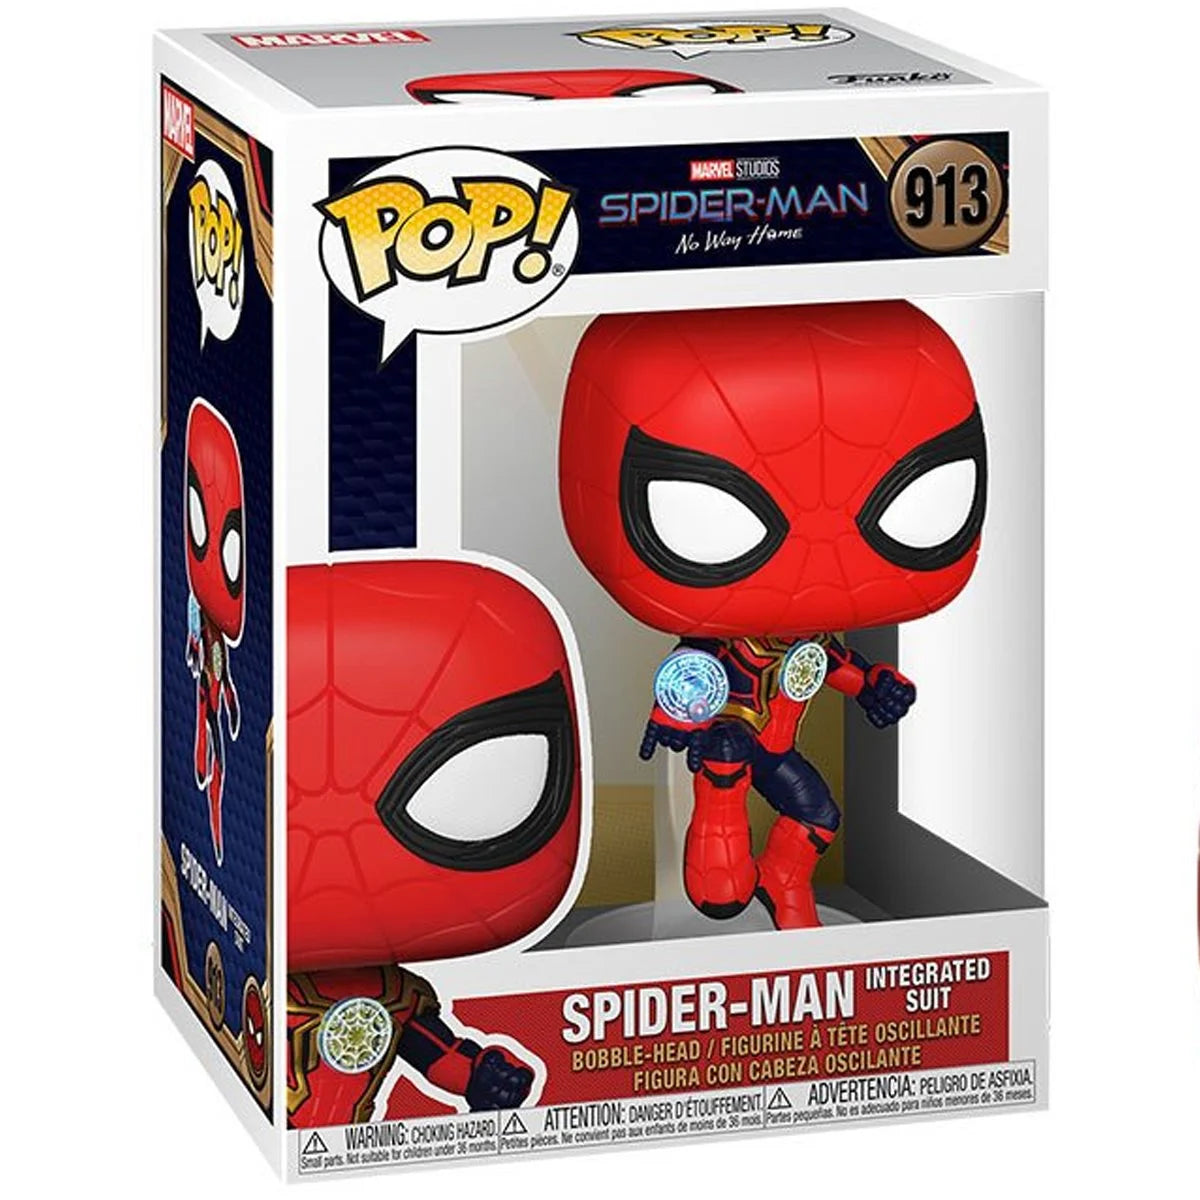 Spider-Man: No Way Home Spider-Man Integrated Suit Funko Pop!